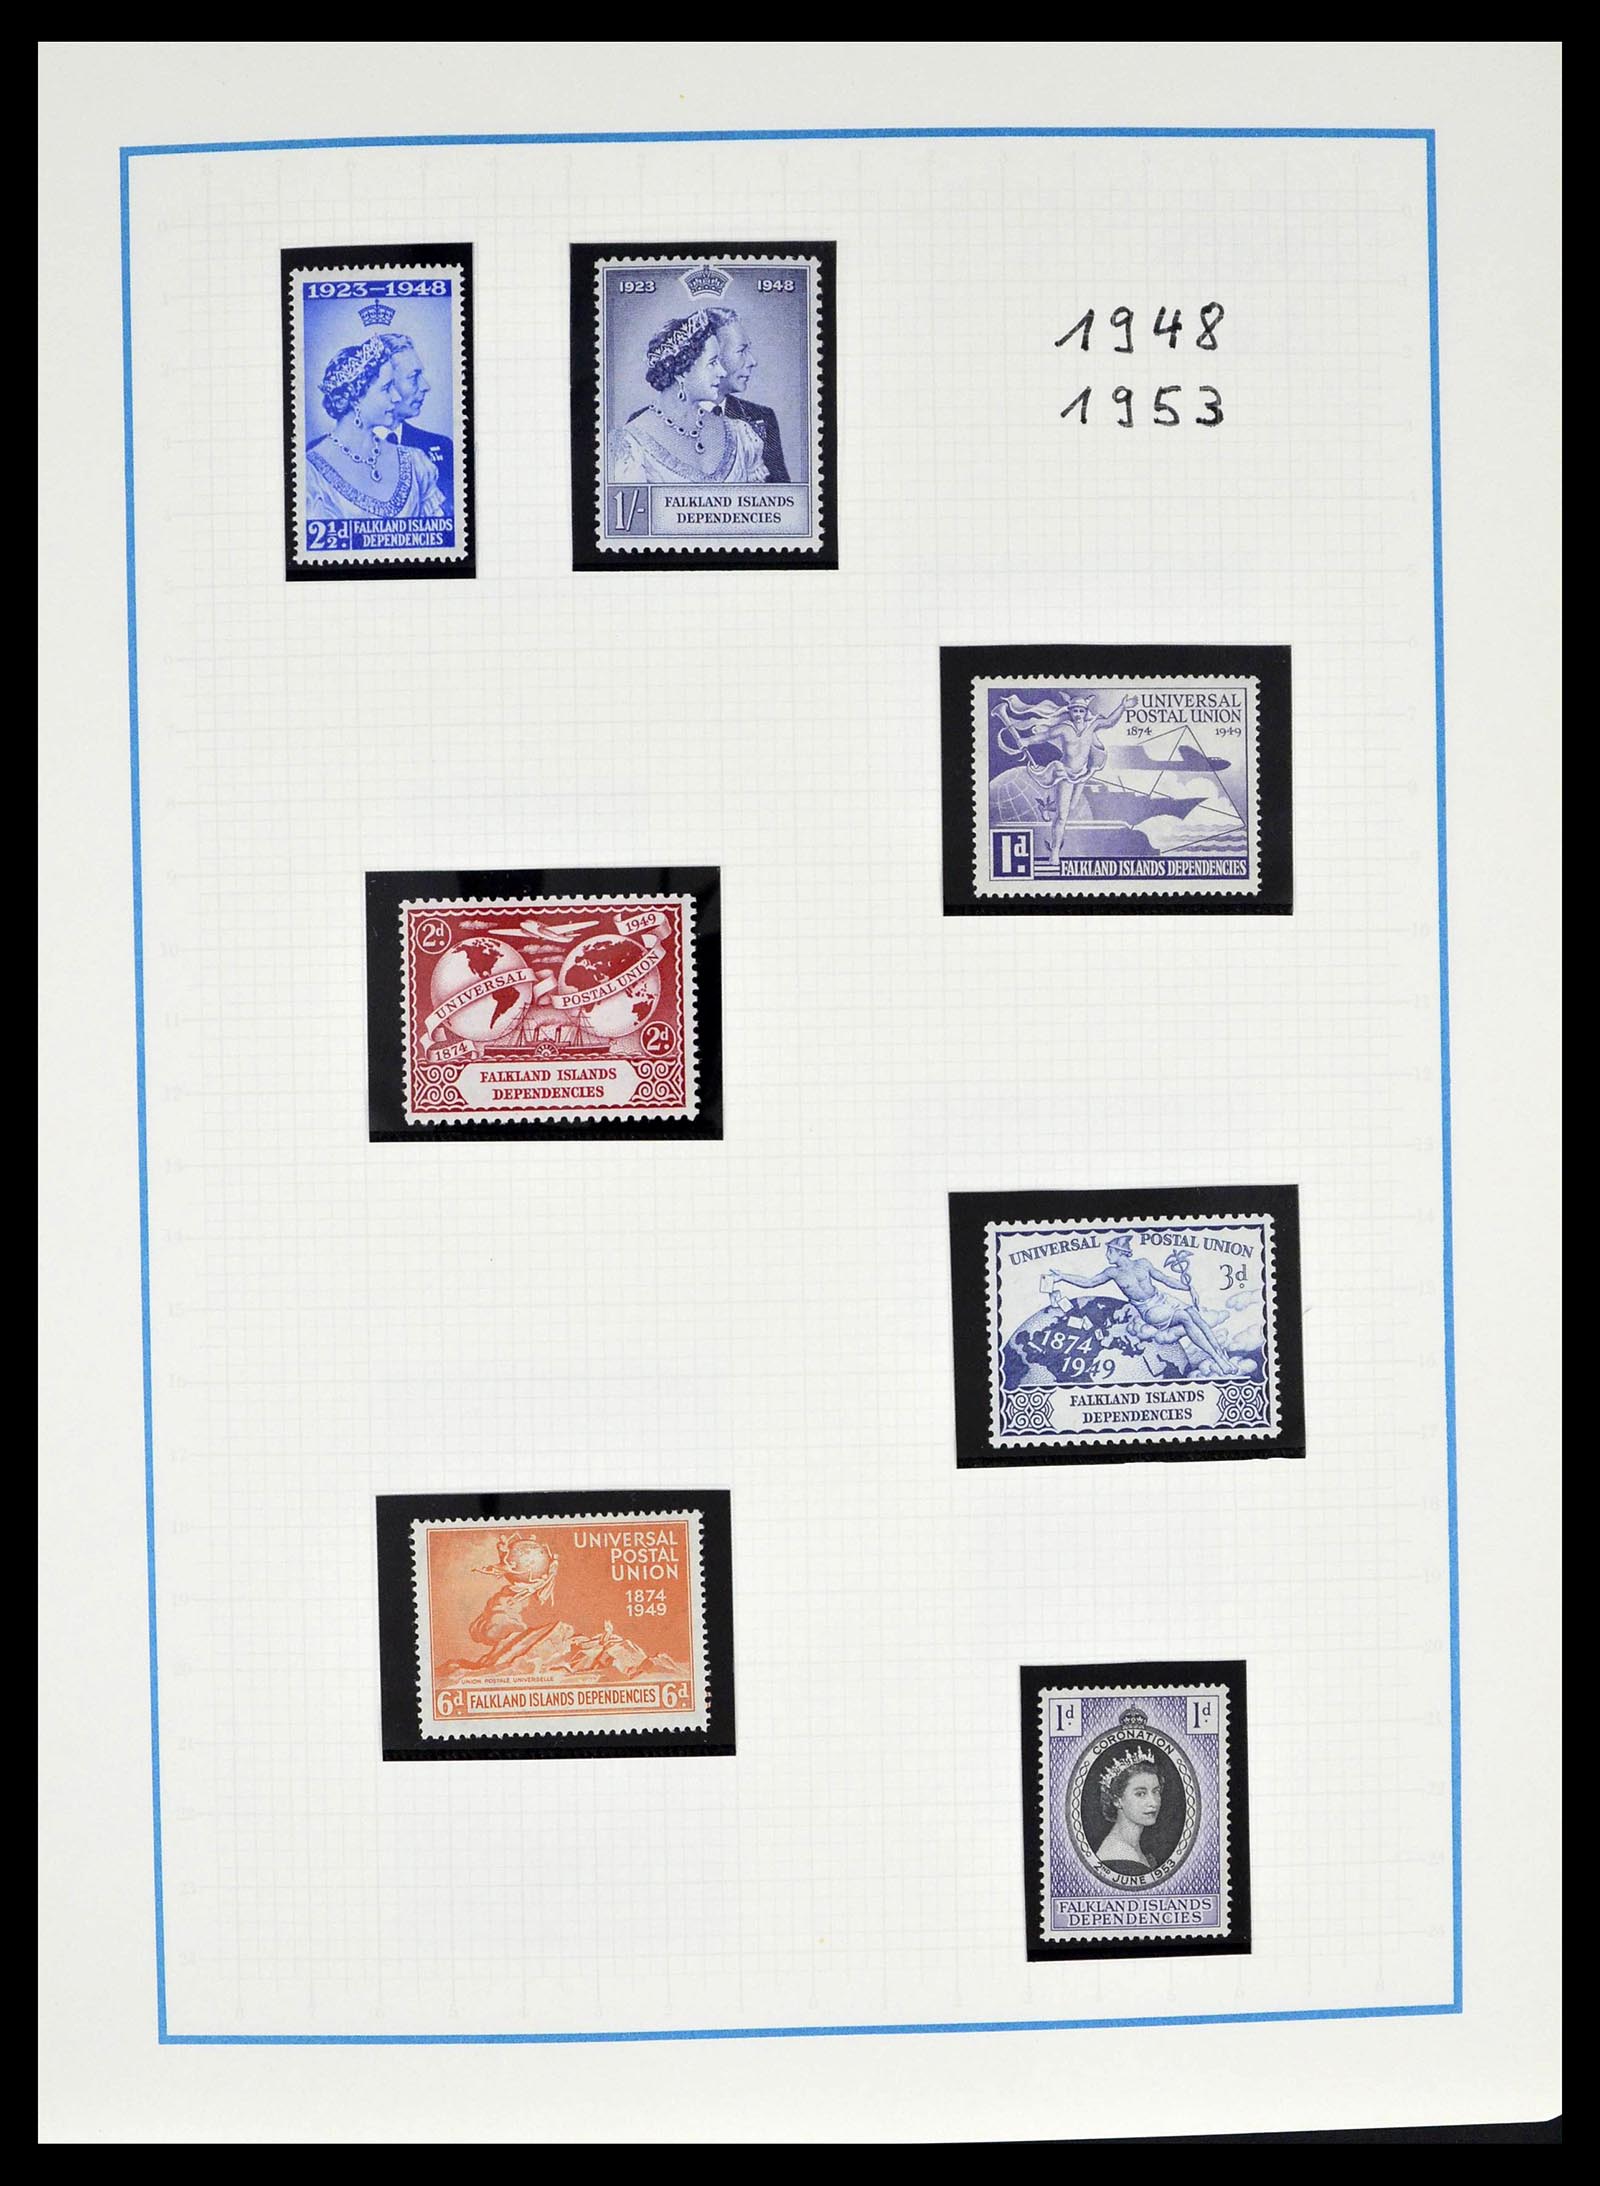 39398 0030 - Stamp collection 39398 Antarctica 1908-1984.